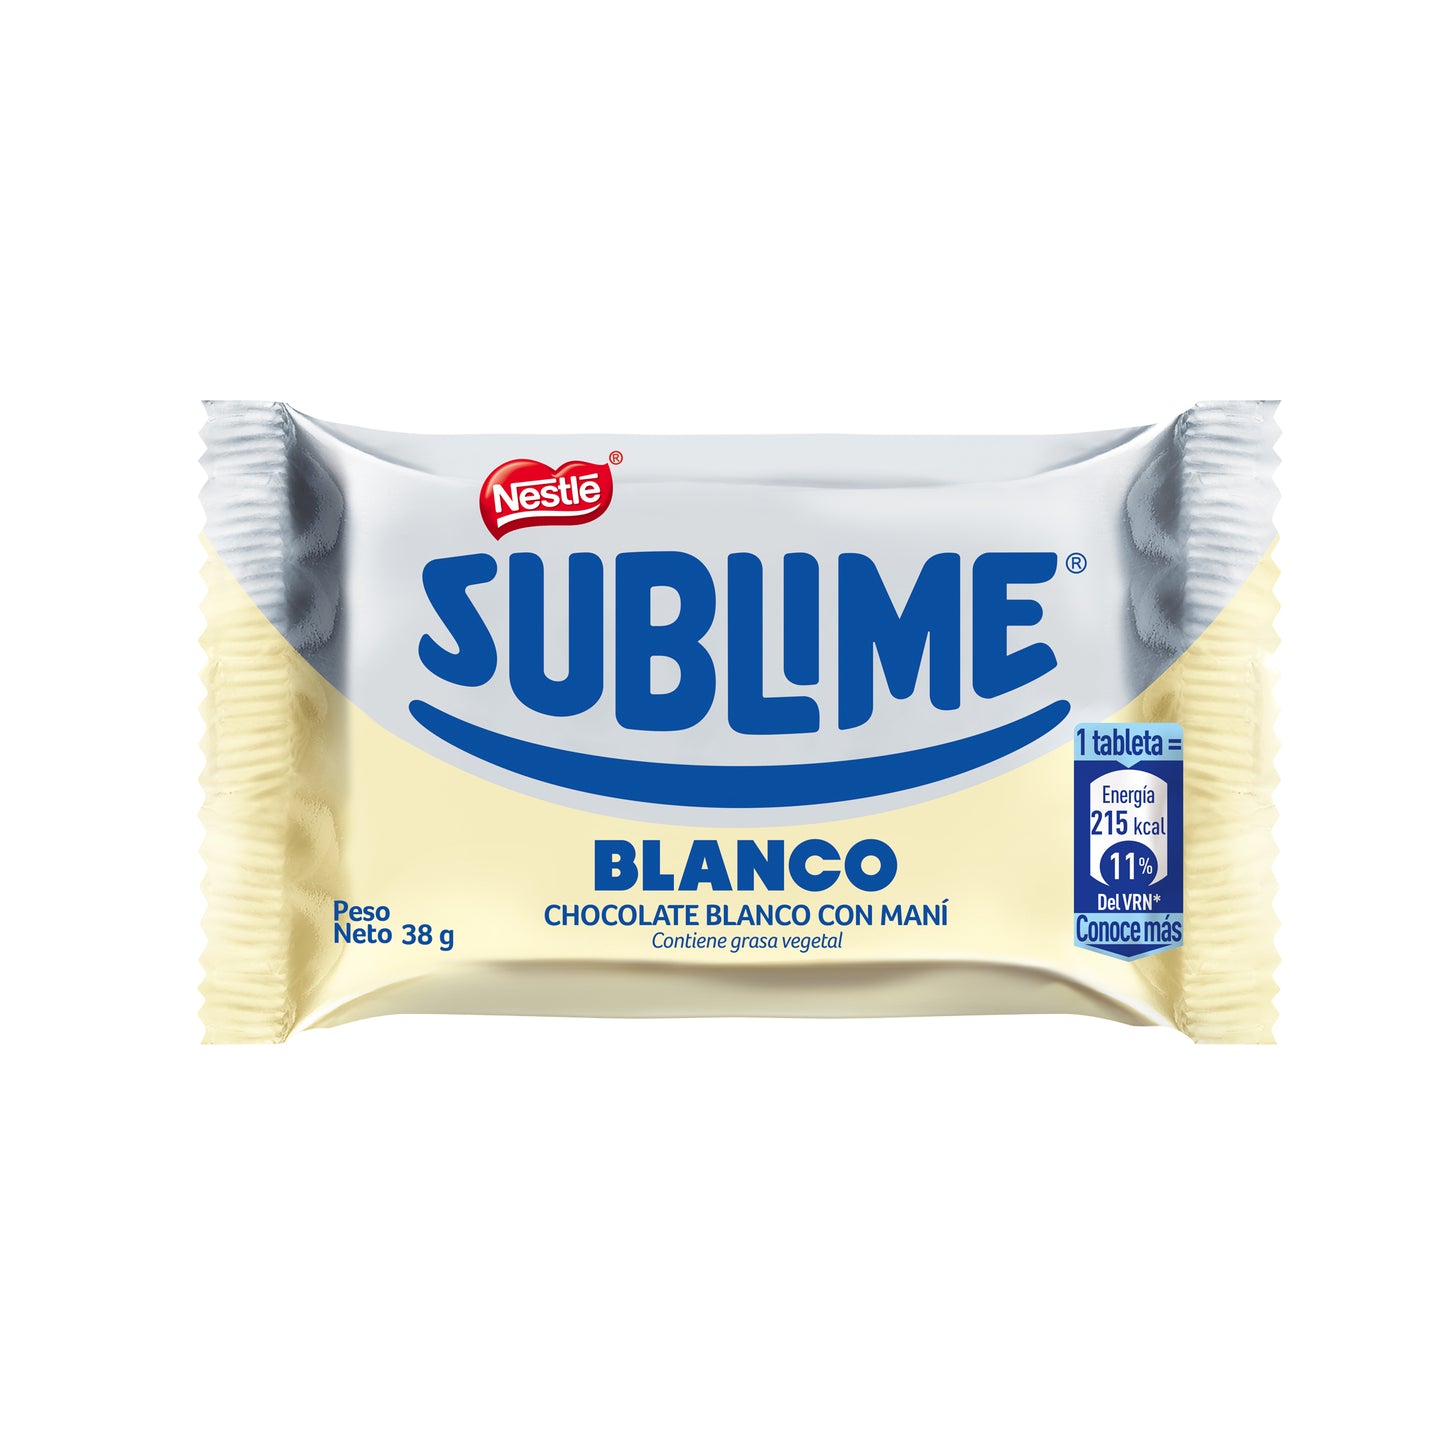 Sublime Blanco display 20 uni x 38g c/u